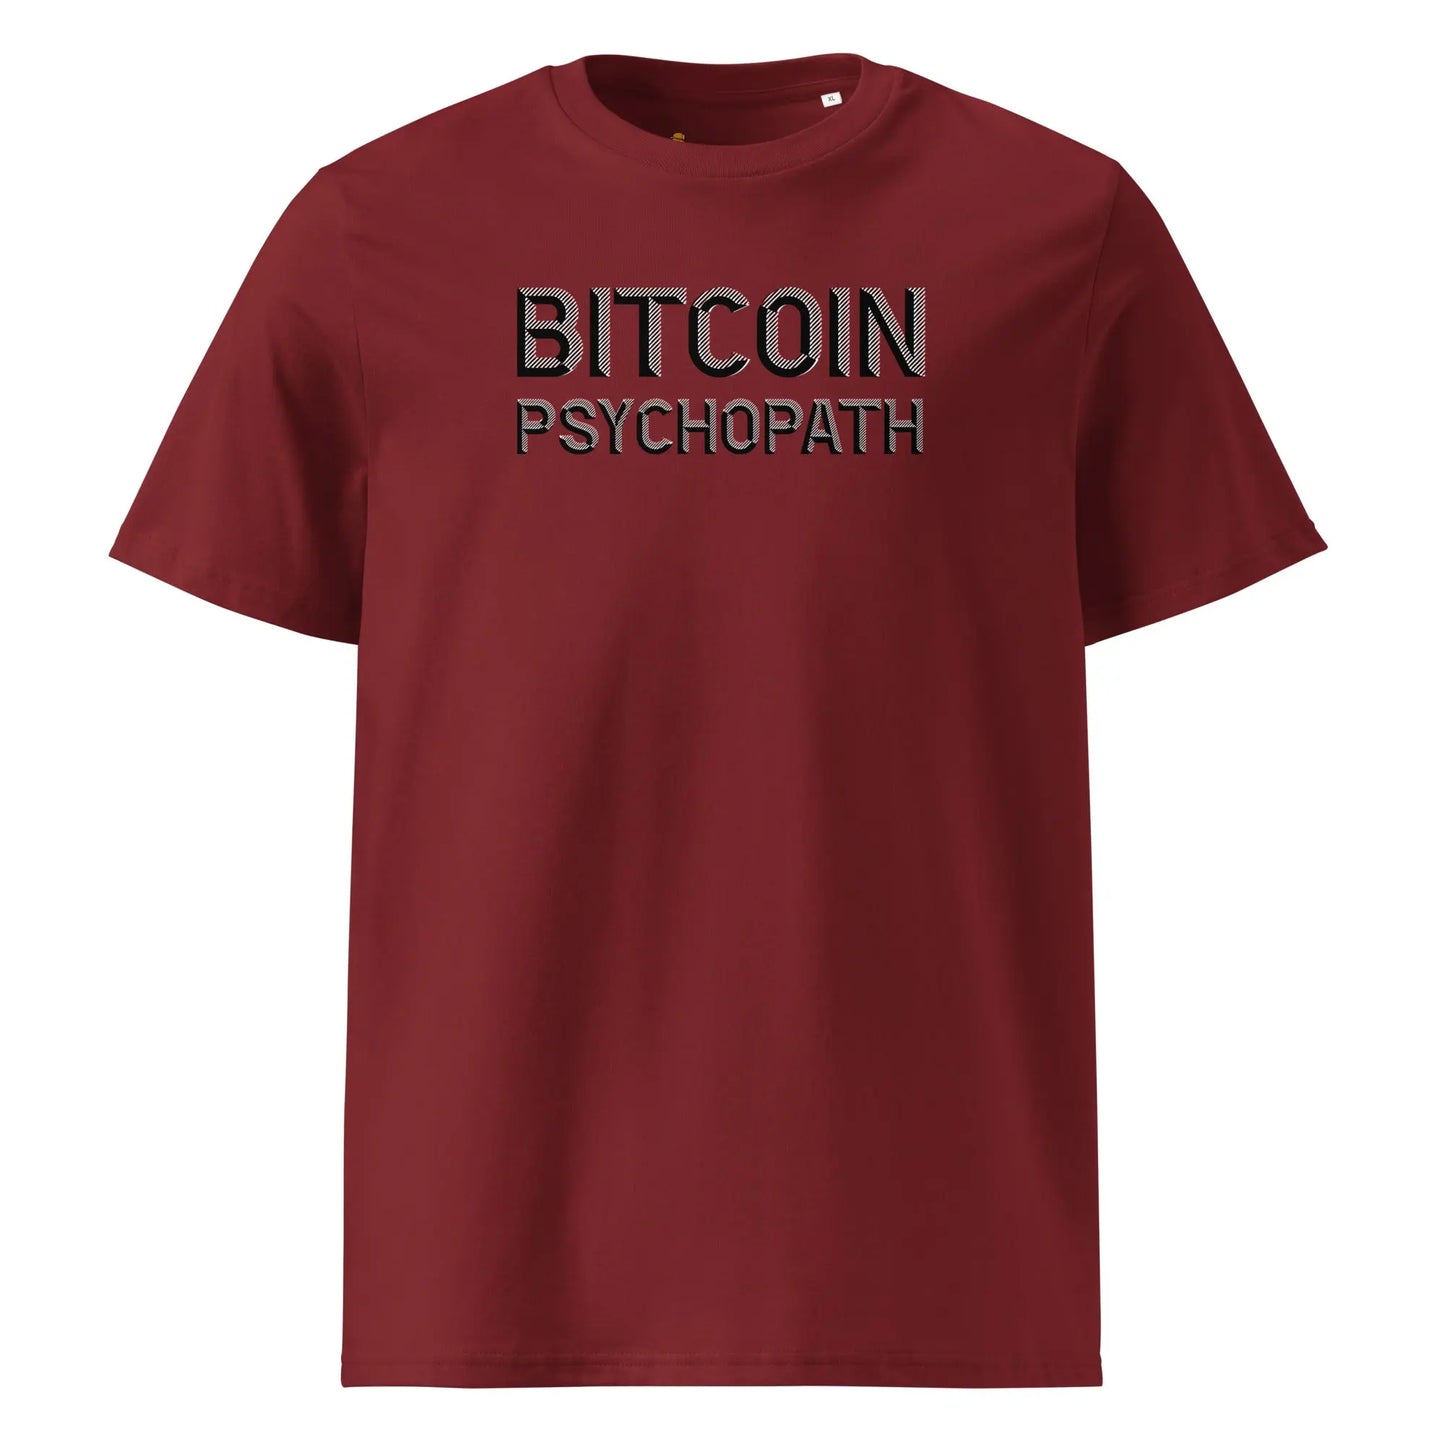 Bitcoin Psychopath - Premium Unisex Organic Cotton Bitcoin T-shirt Store of Value